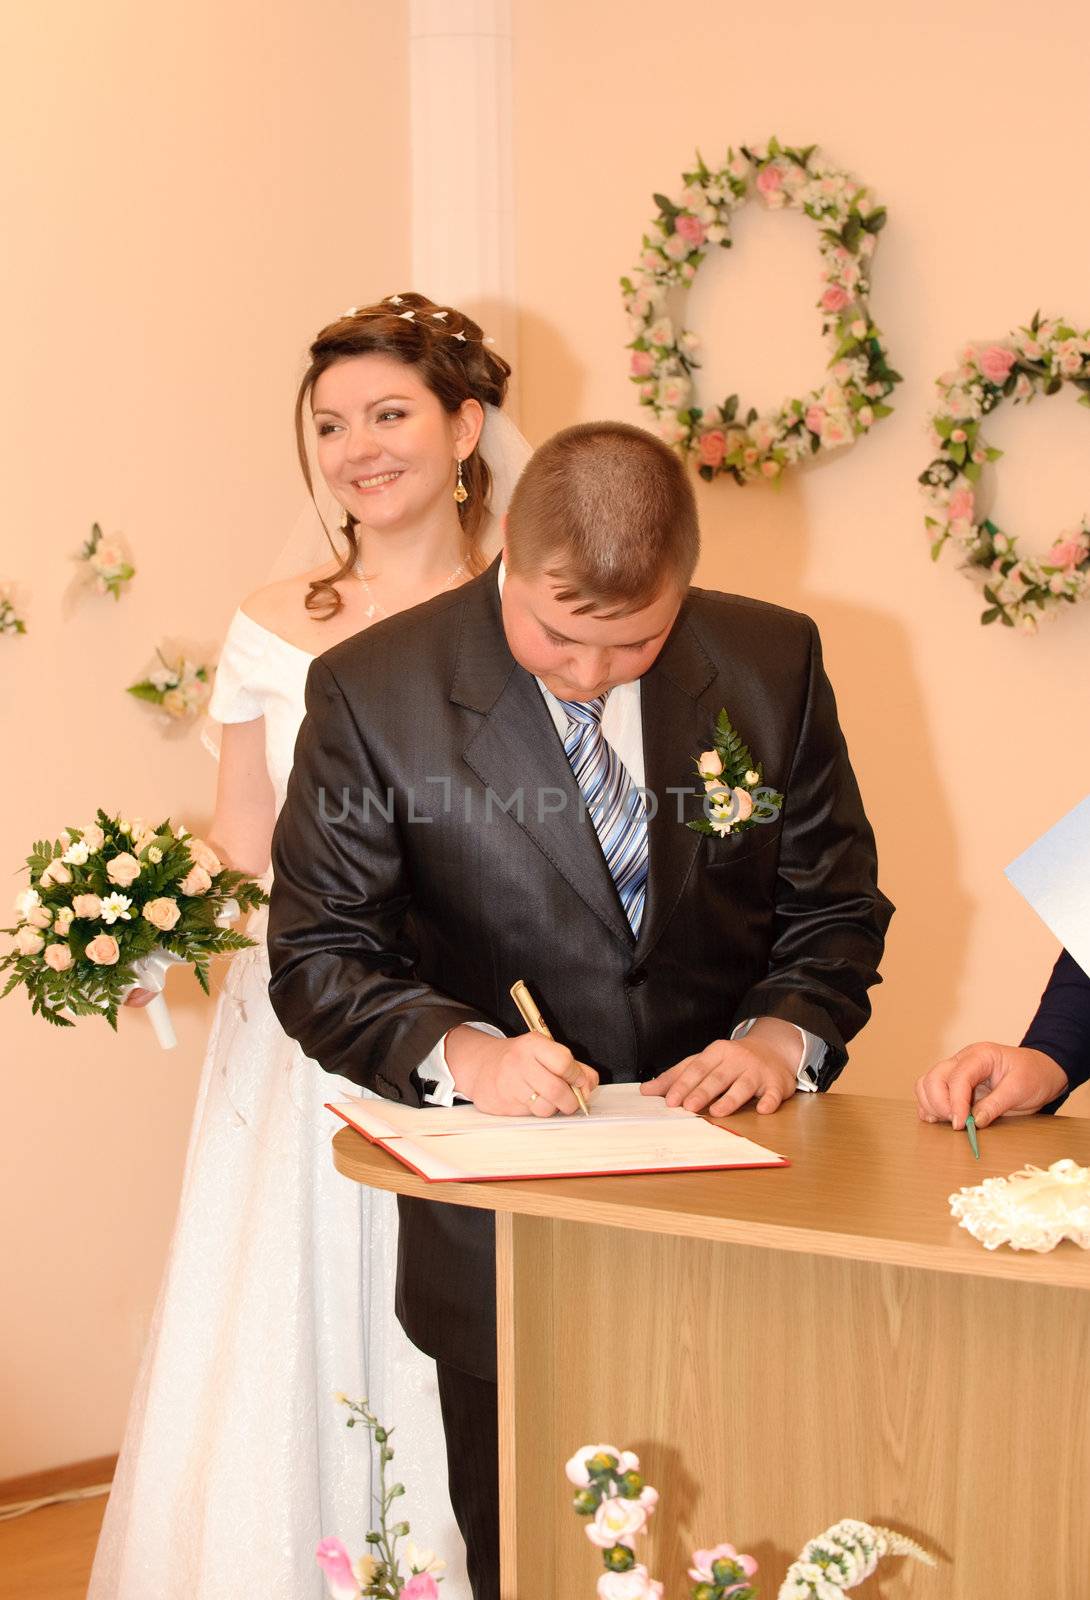 The wedding signature. Ceremony of wedding, a fastening the signature